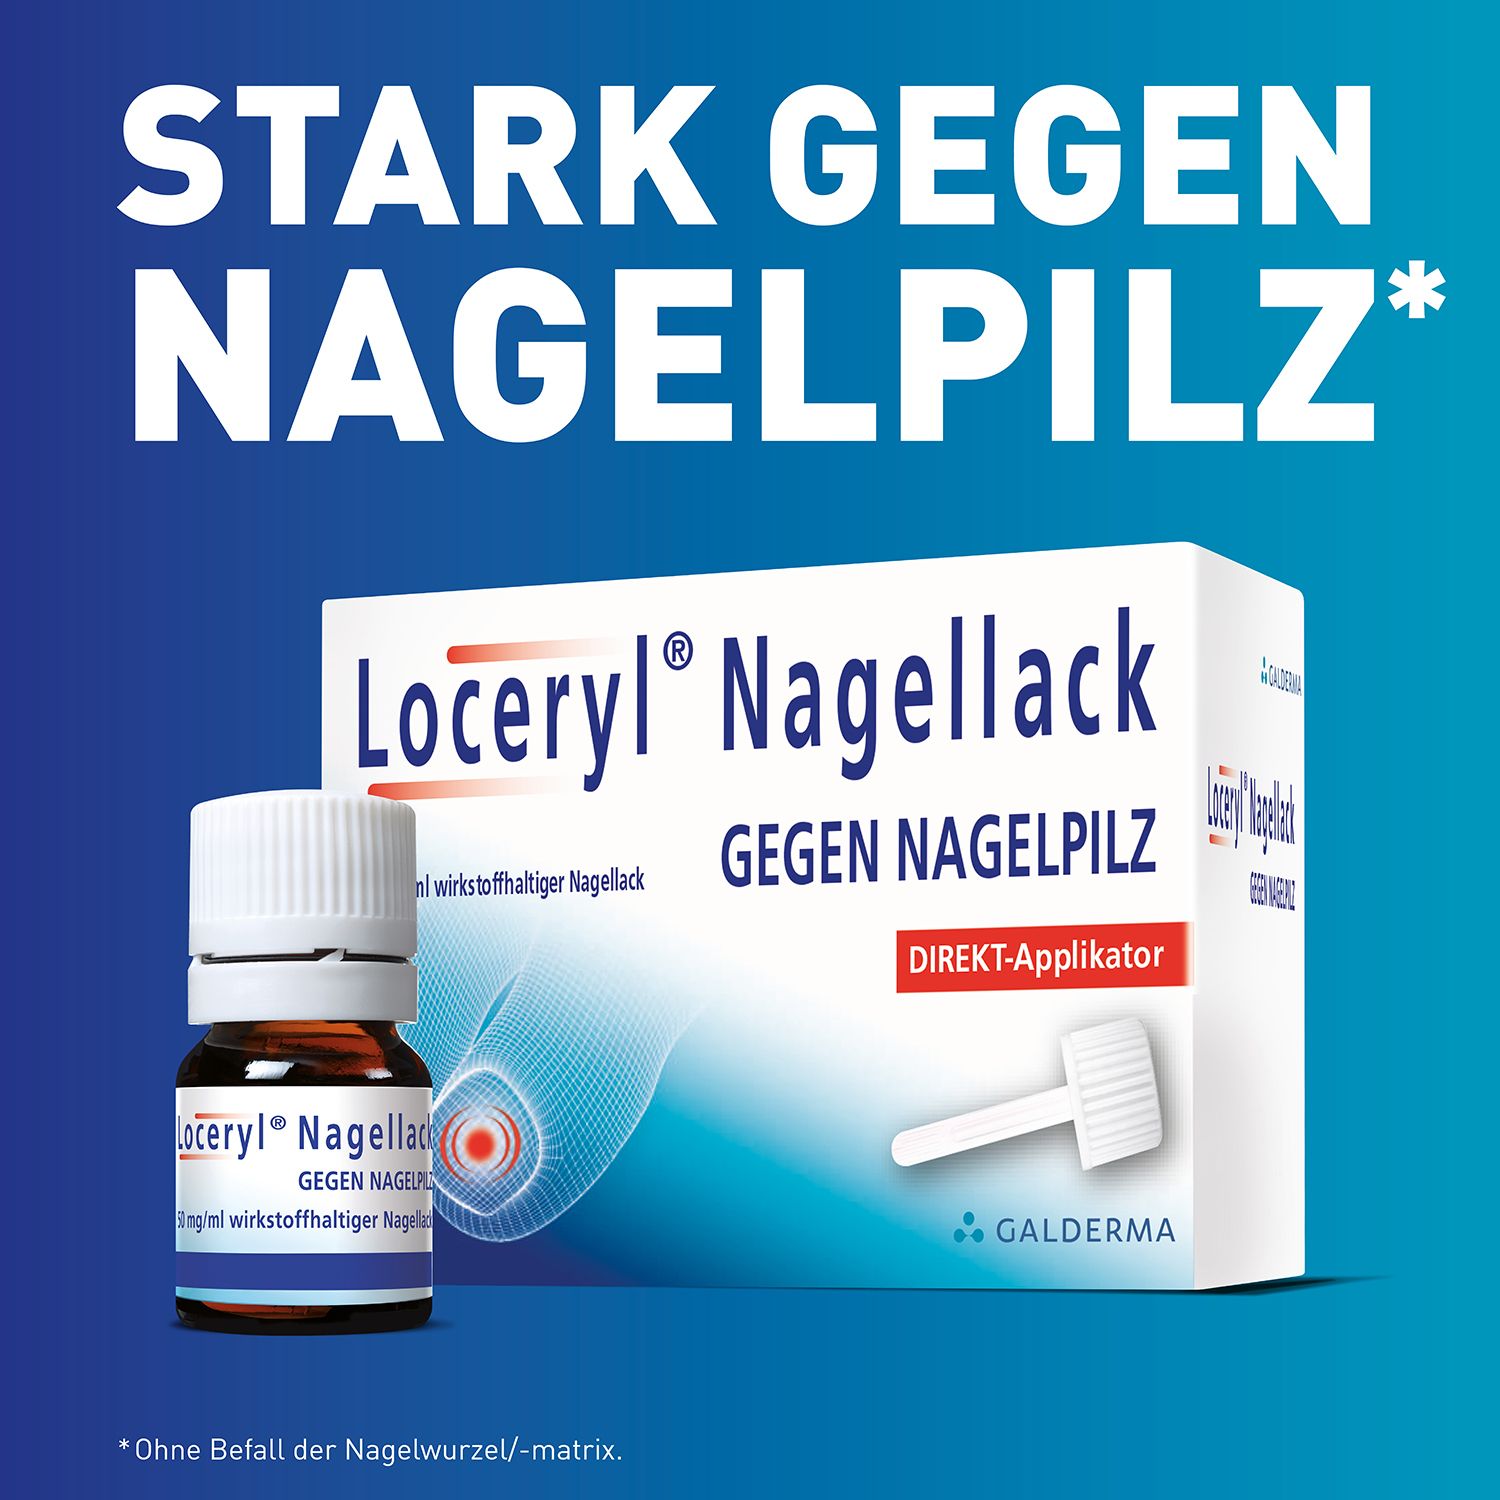 Loceryl® Nagellack gegen Nagelpilz mit DIREKT-Applikator